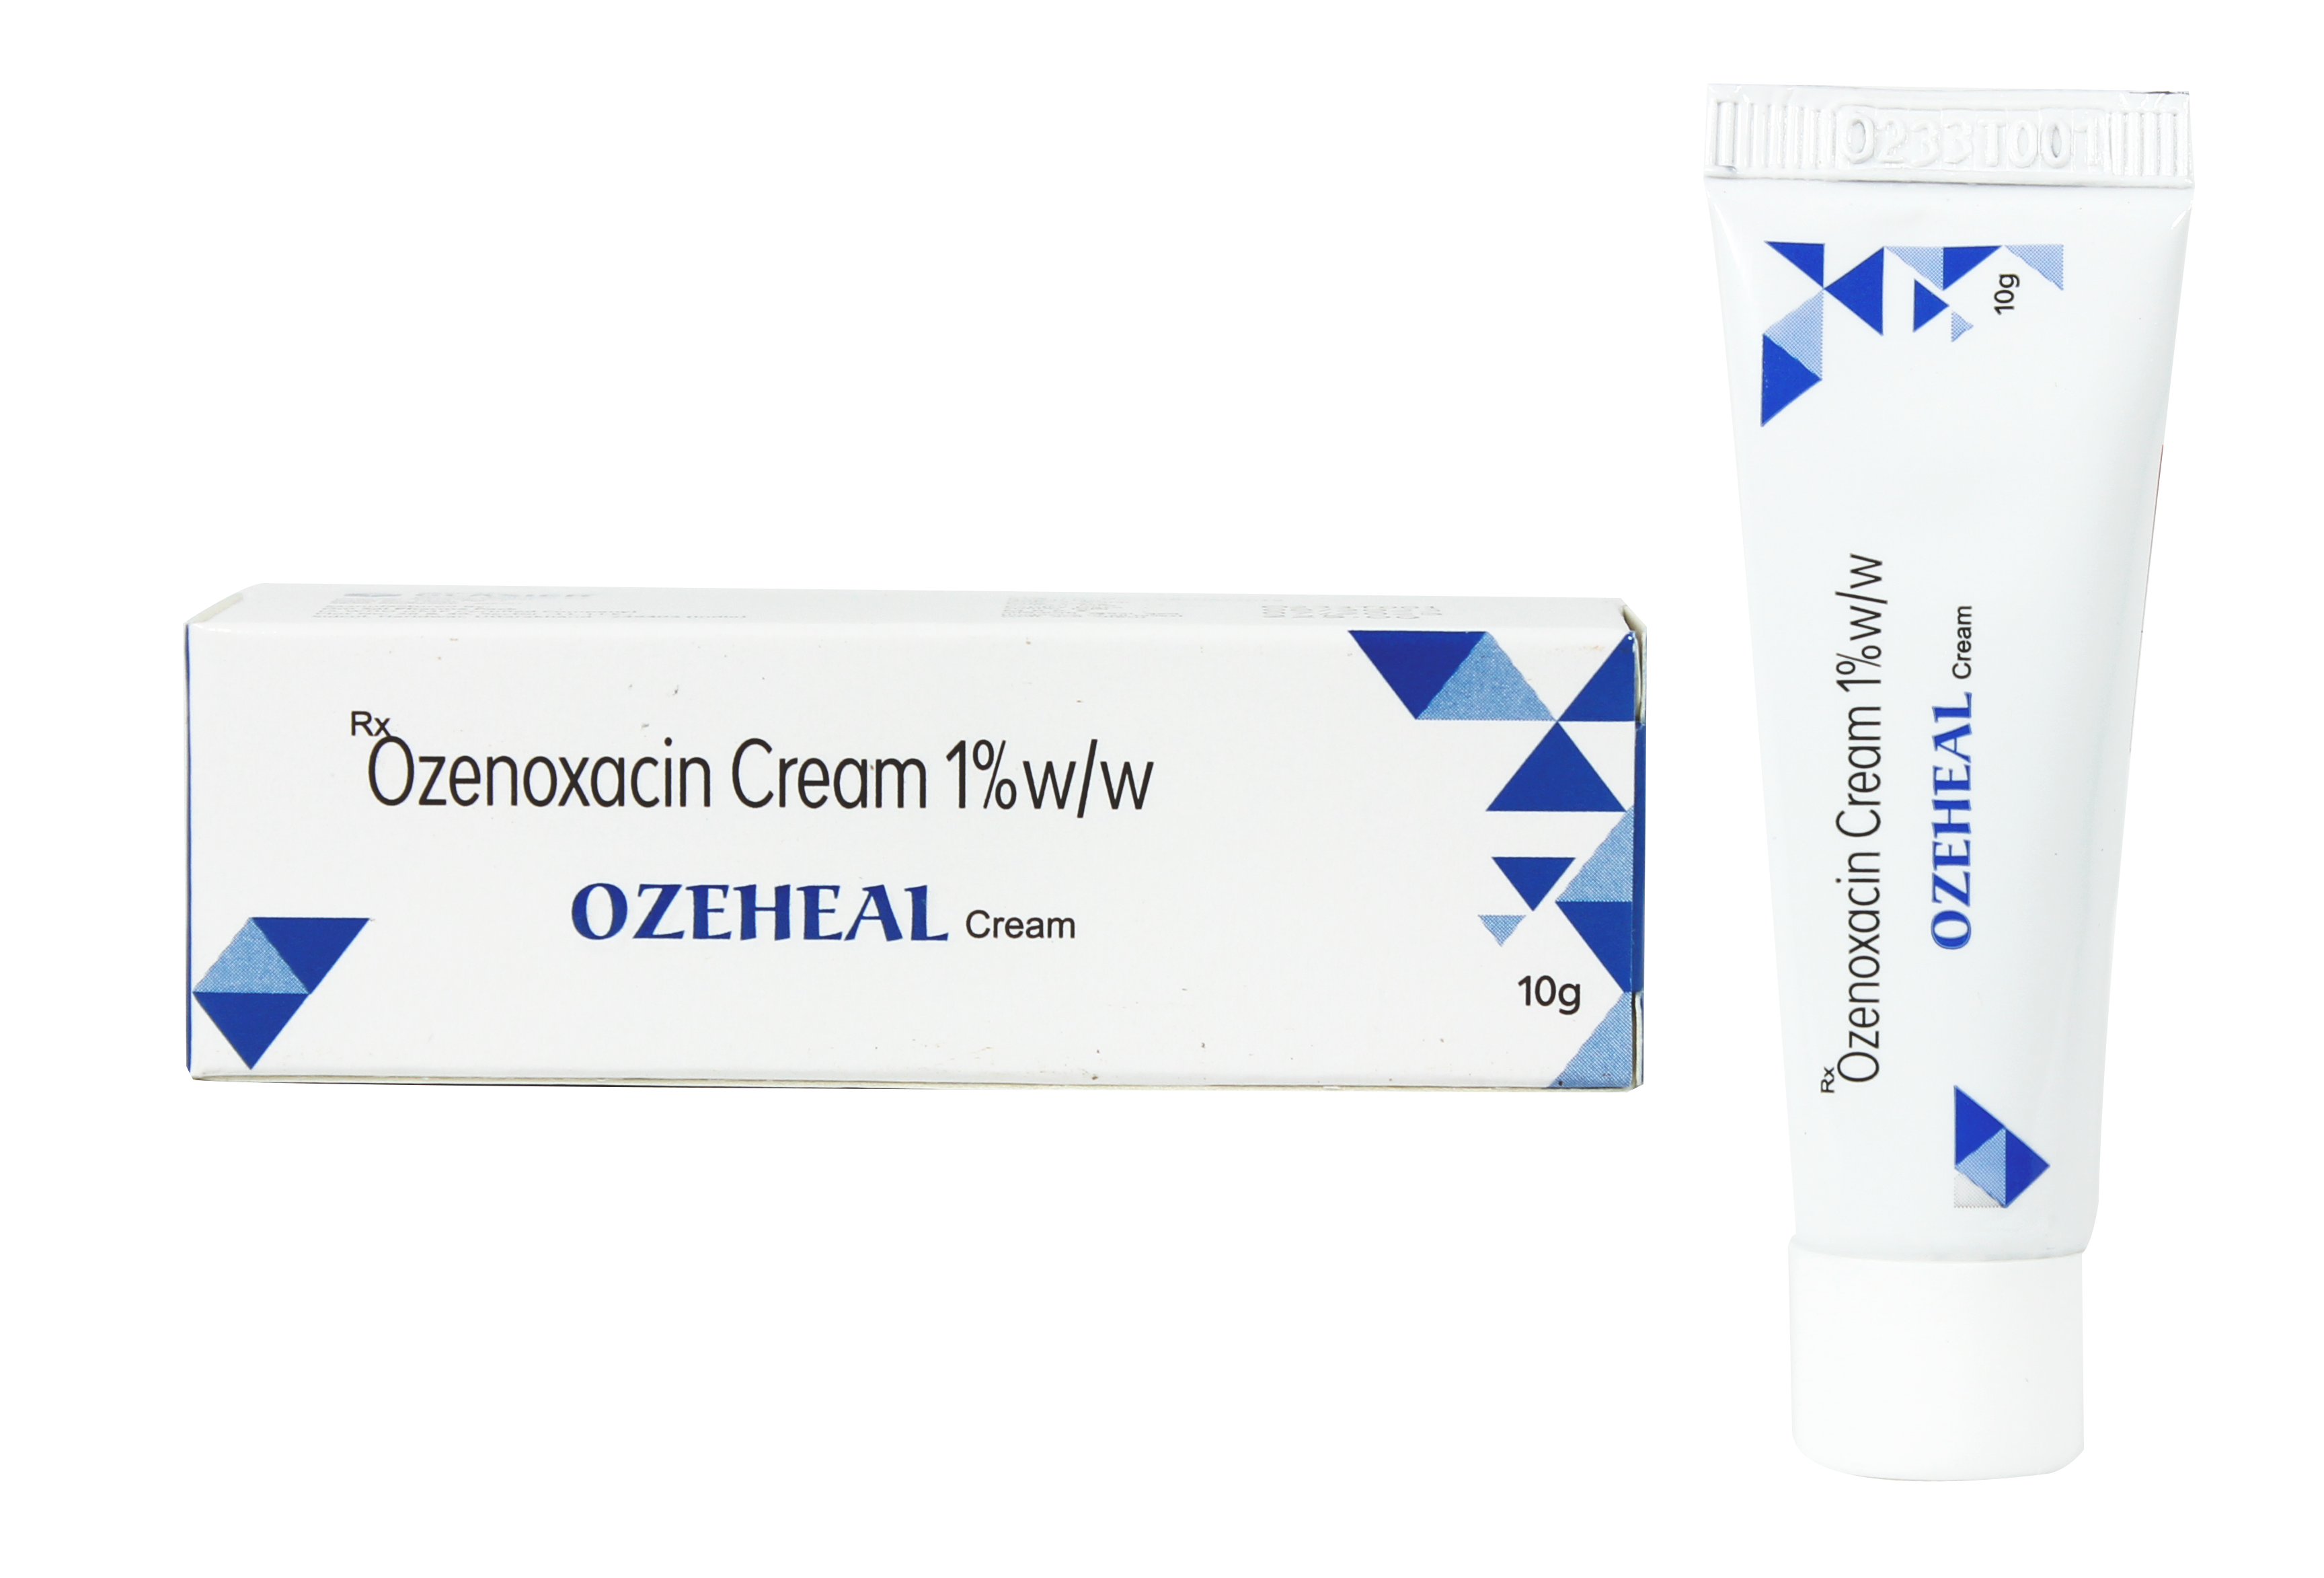 Ozenoxacin Cream Manufacturer & Wholesaler Supplier